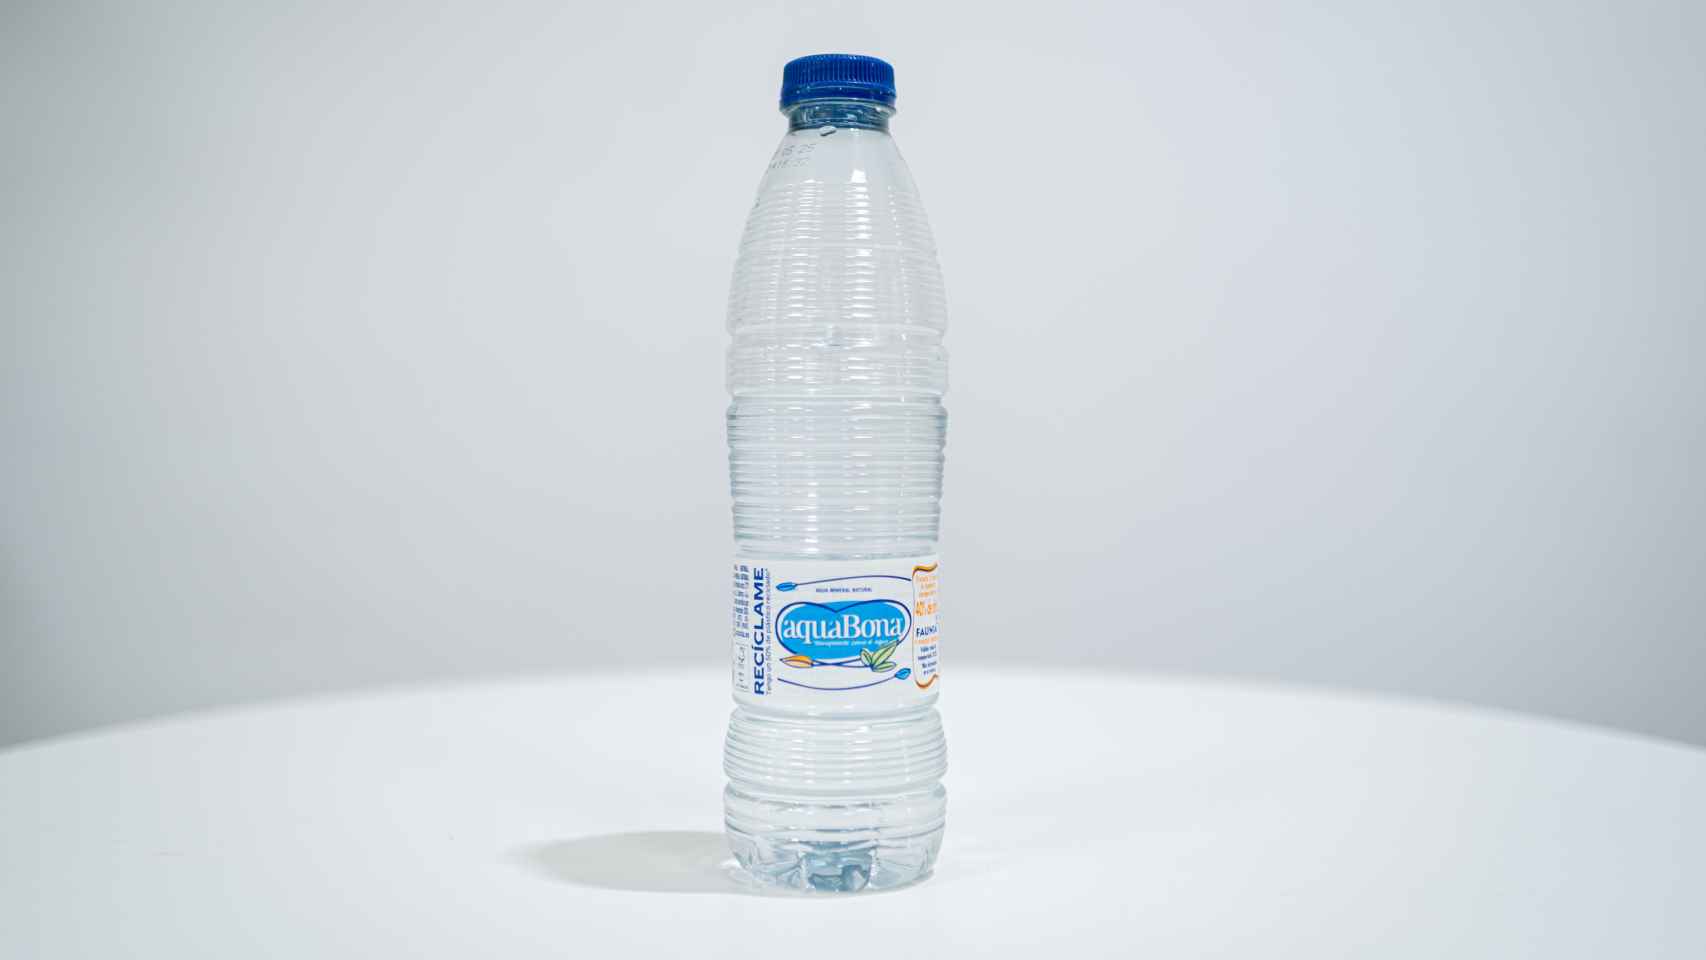 La botella de medio litro de Aquabona.